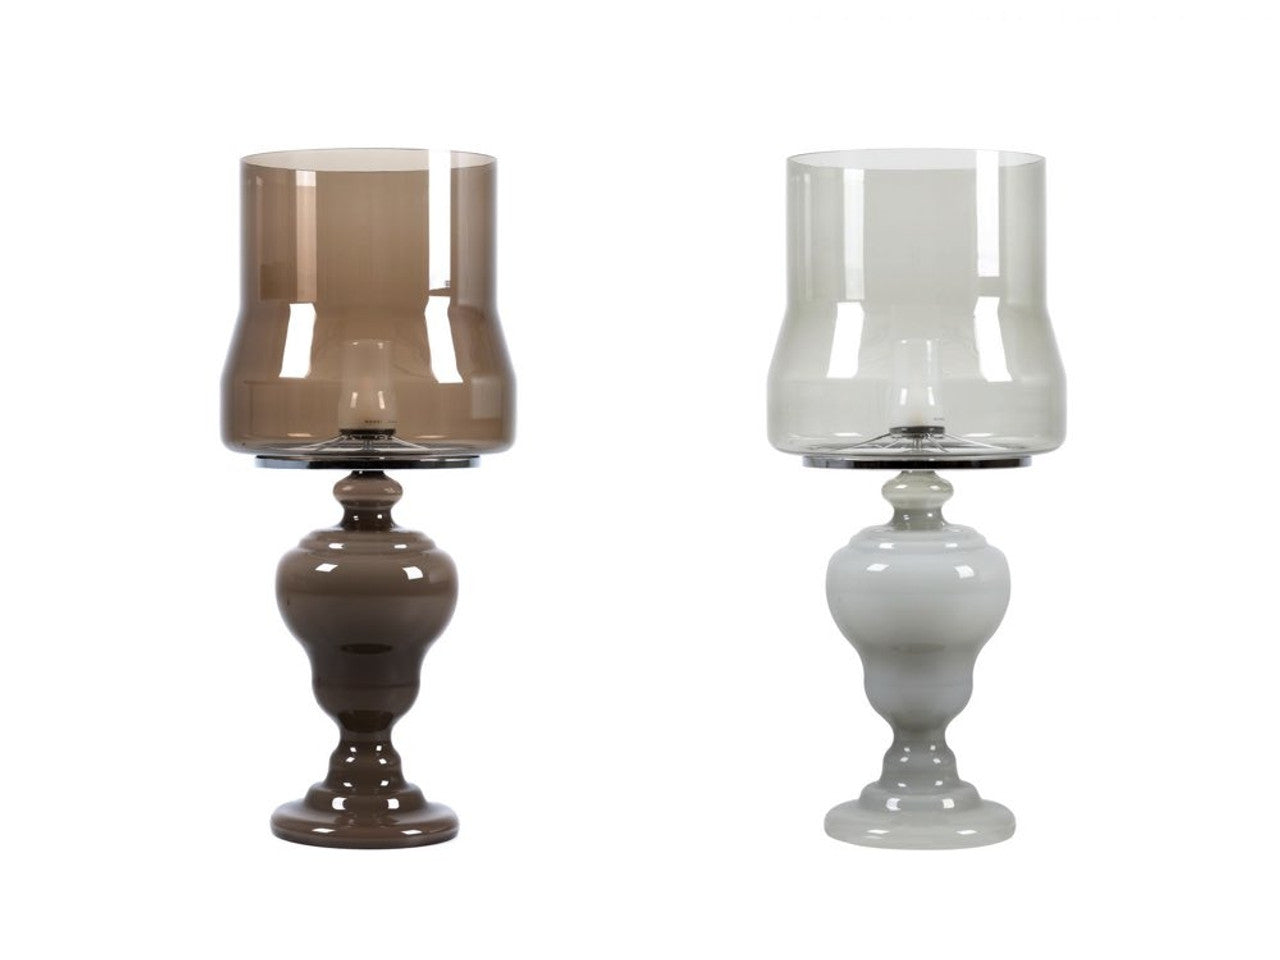 Large Royal Lights online, traditional Classic Table lamp for living room, Royal lighting, Vintage Deco Lamps, Tall table Lamps online shop, Large  table lights